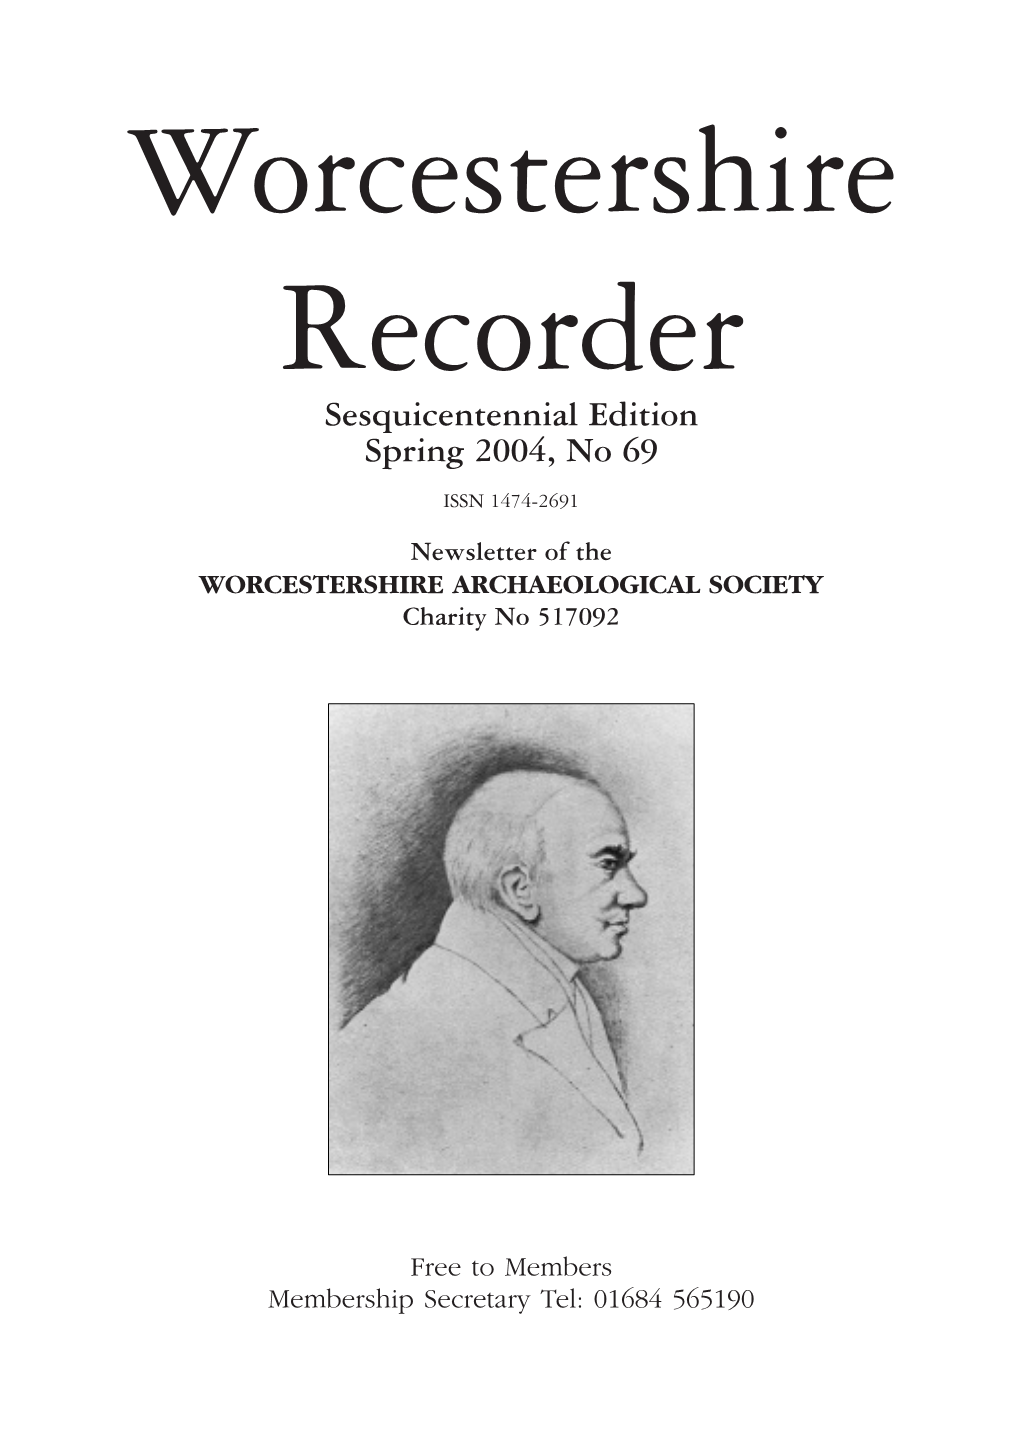 Worcs Recorder Issue 69